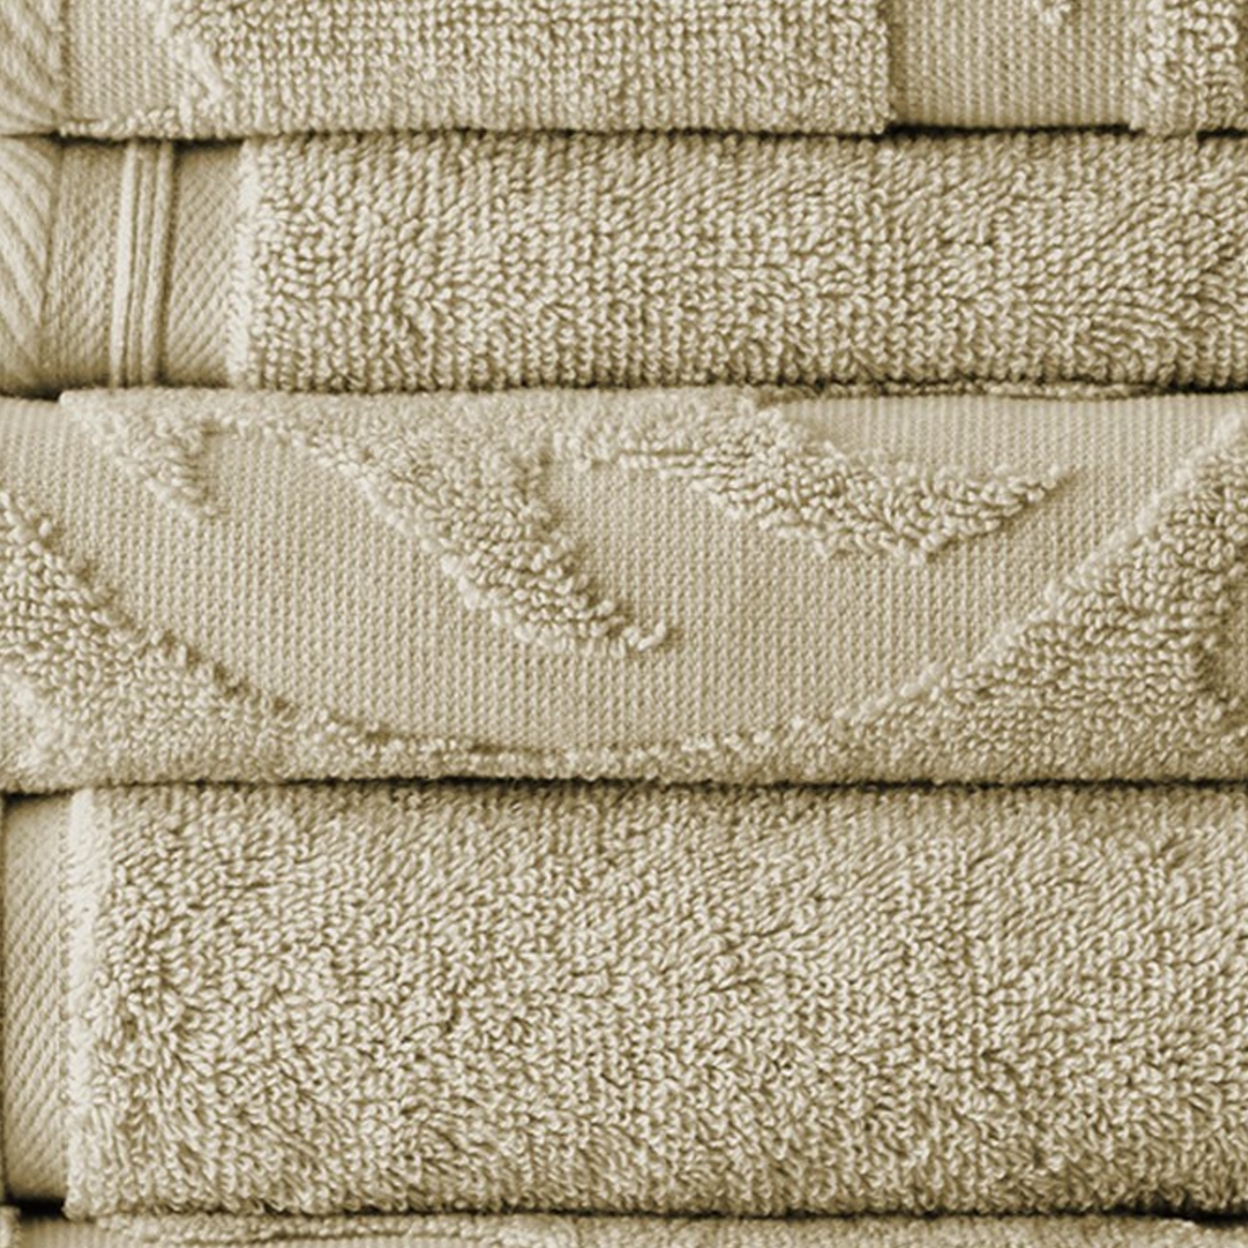 Oya 6 Piece Soft Egyptian Cotton Towel Set, Solid Medallion Pattern, Beige- Saltoro Sherpi